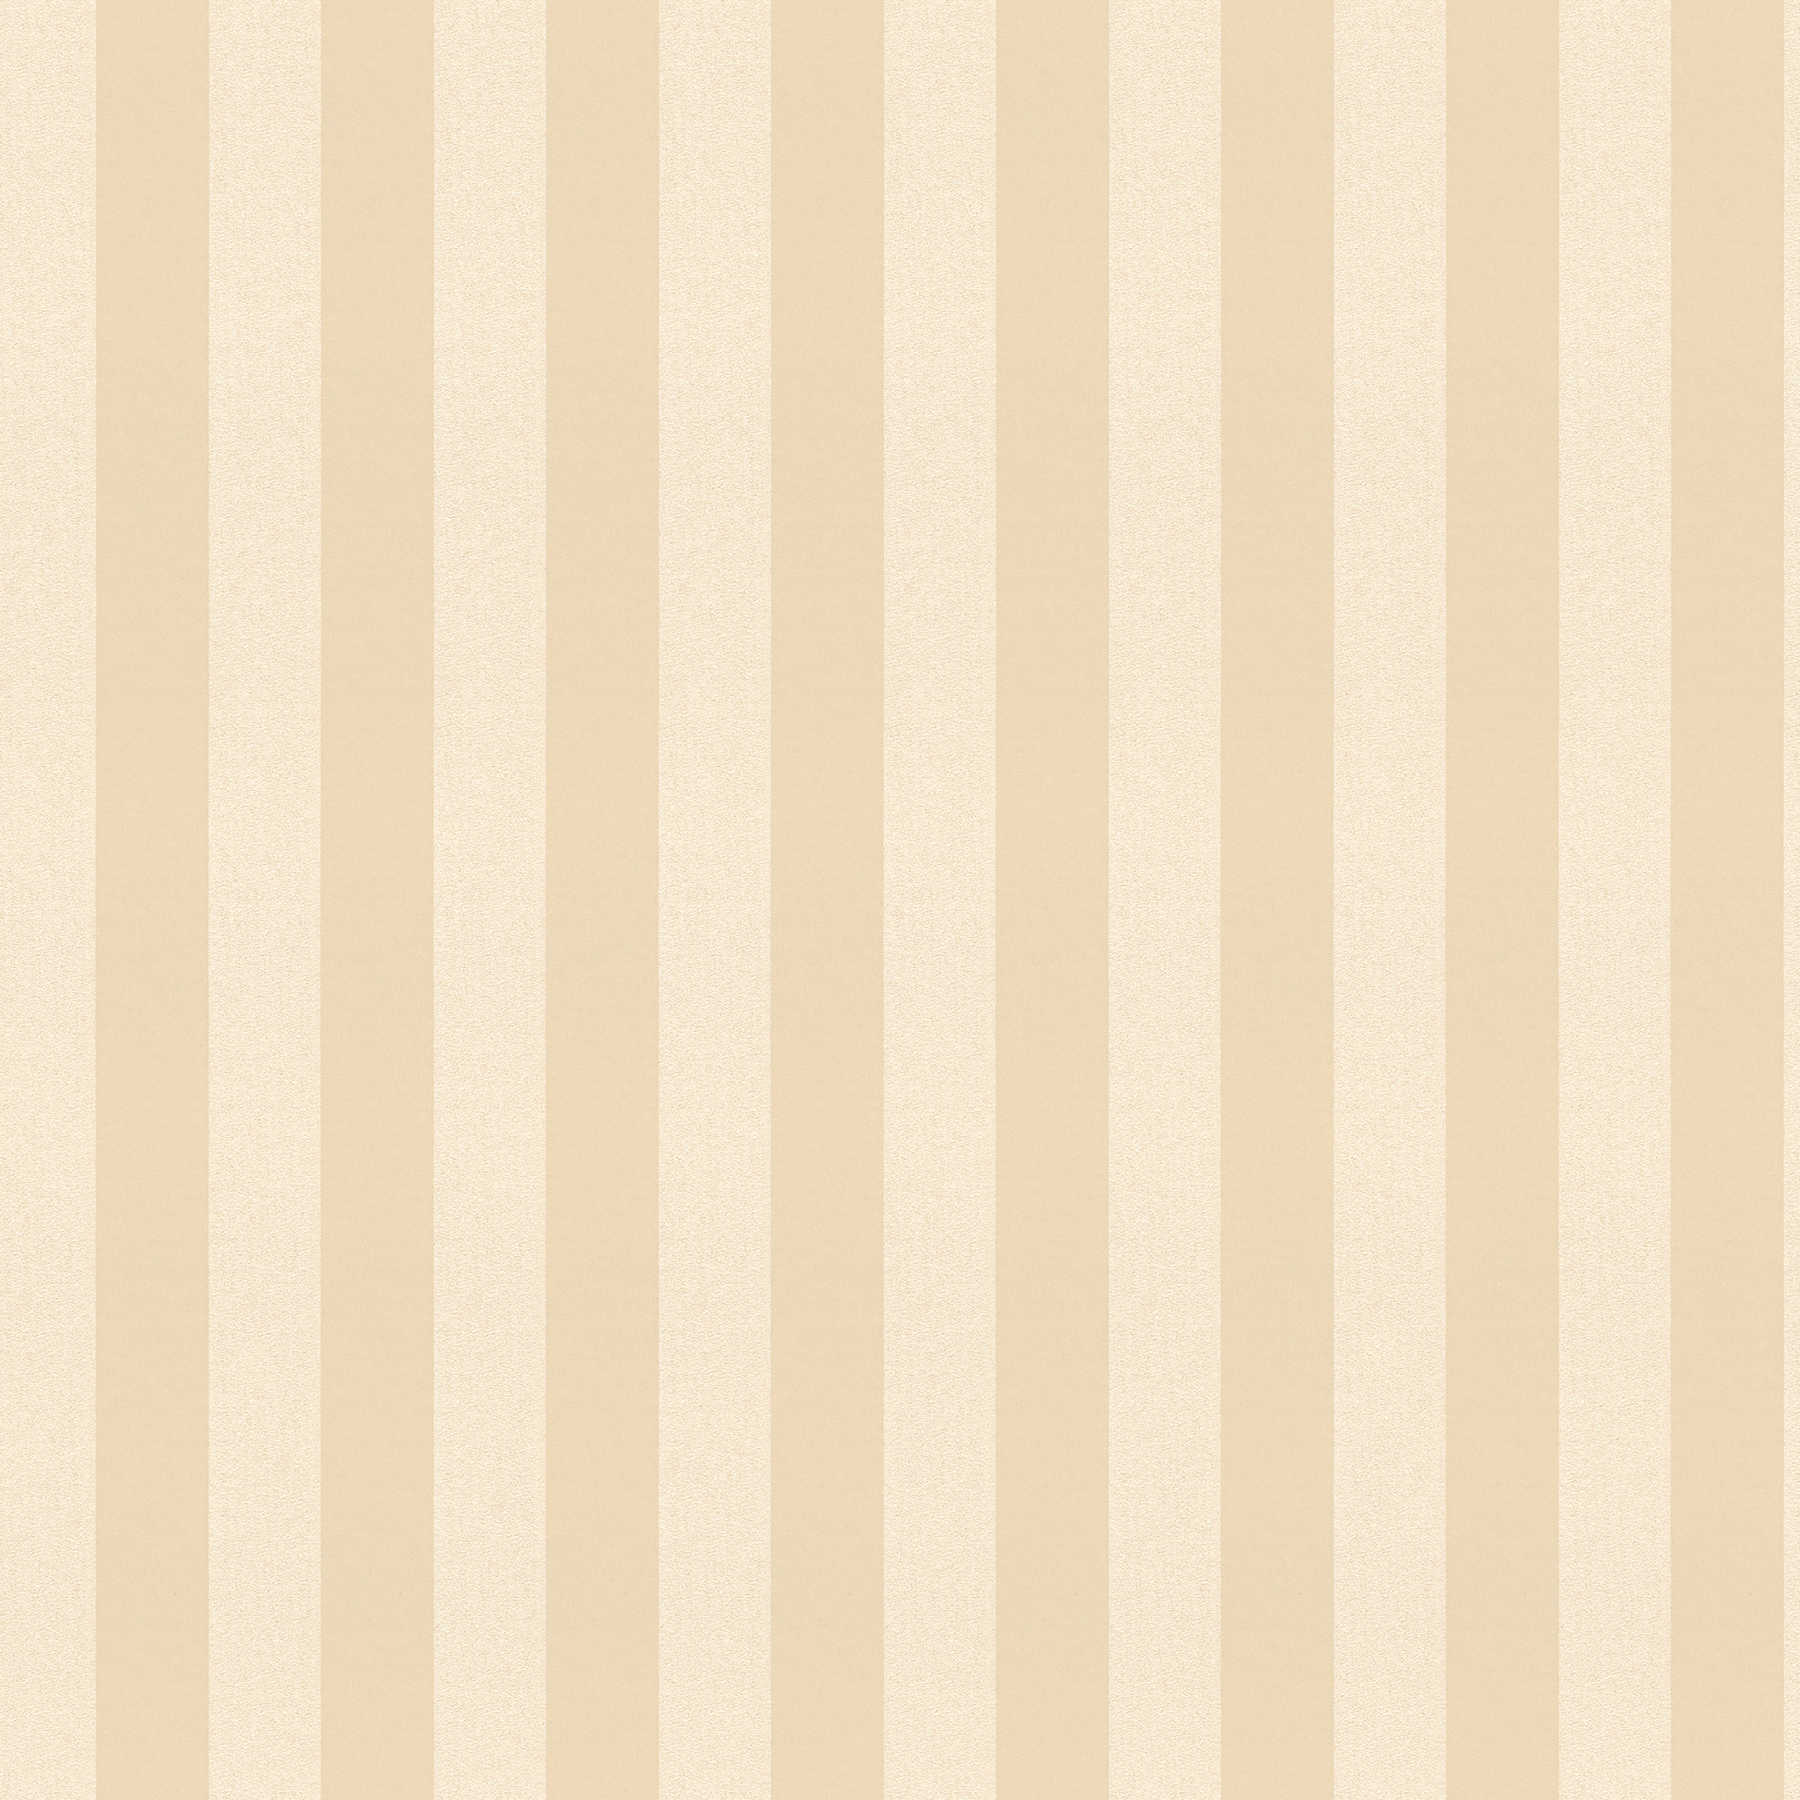         Striped wallpaper with pattern in light beige - cream
    